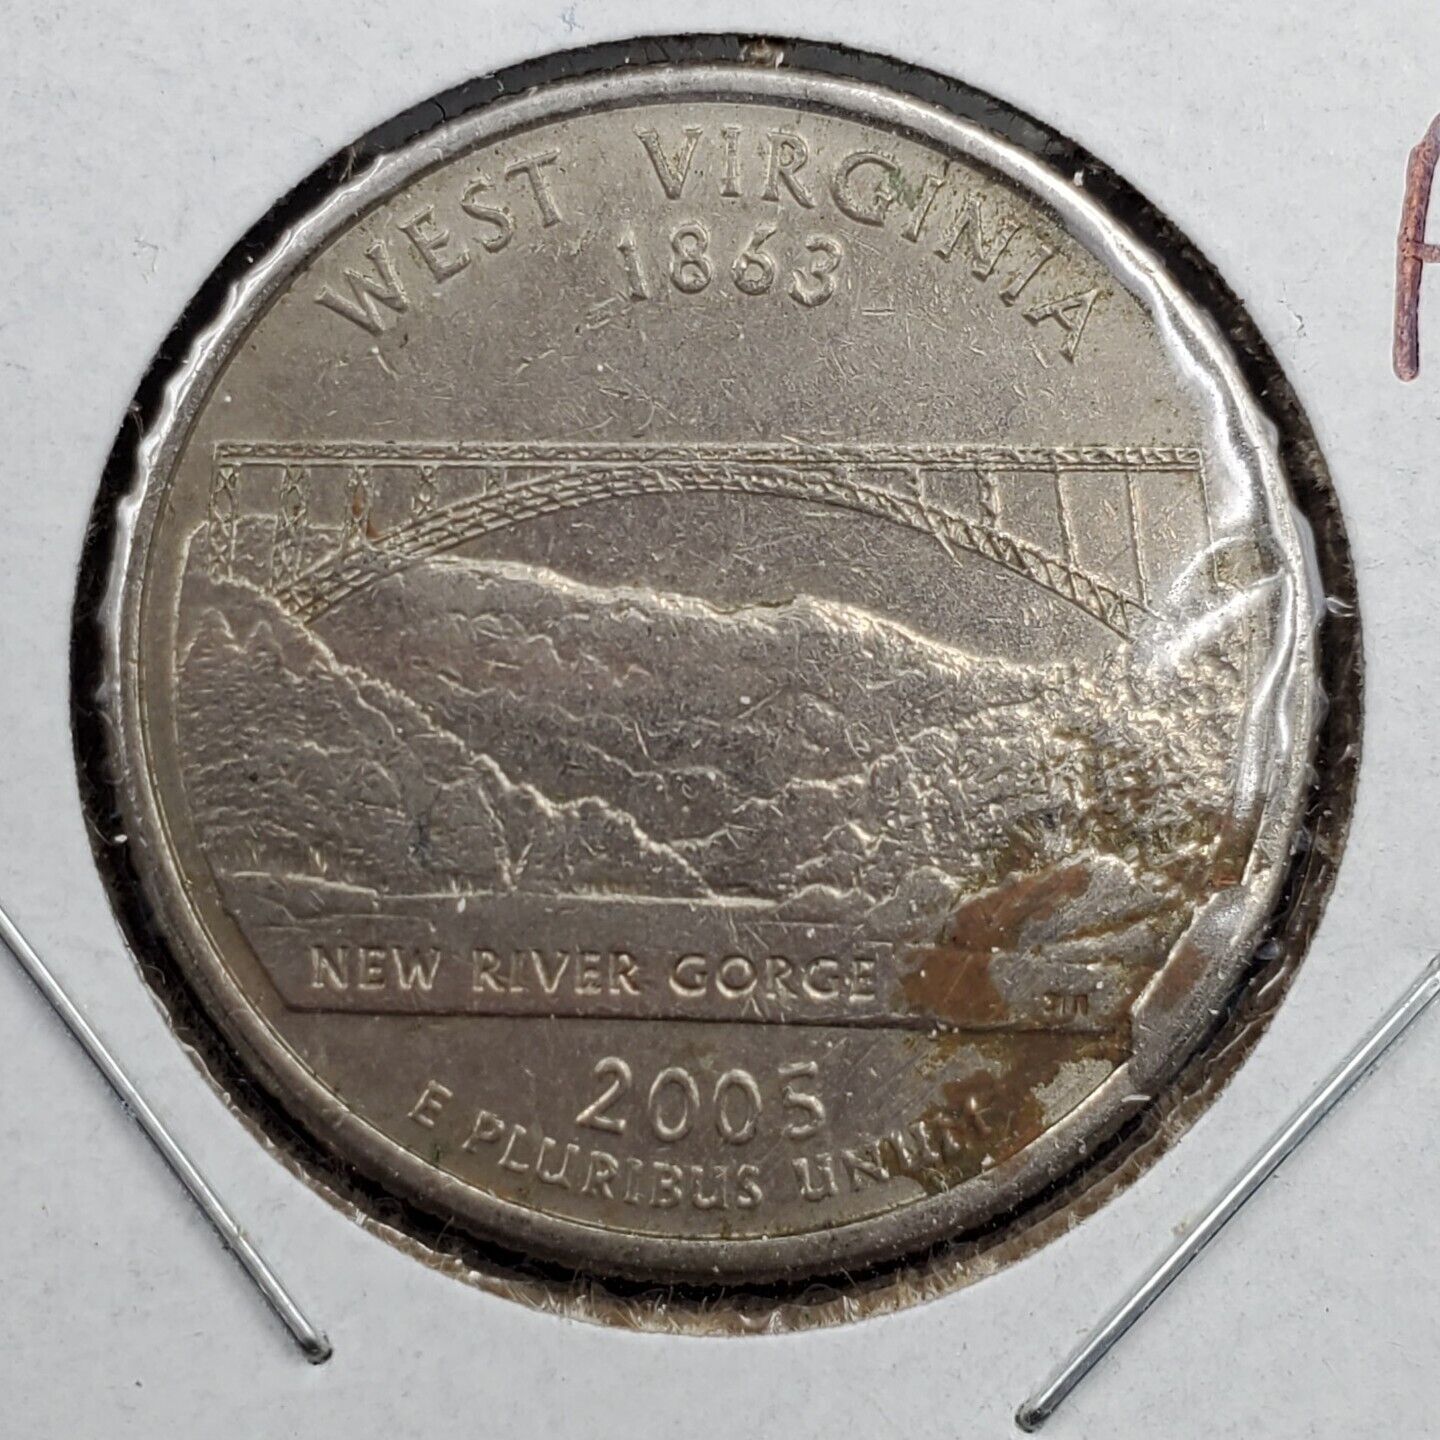 2005 P Washington Quarter West Virginia CUD Reverse Error Coin Circ